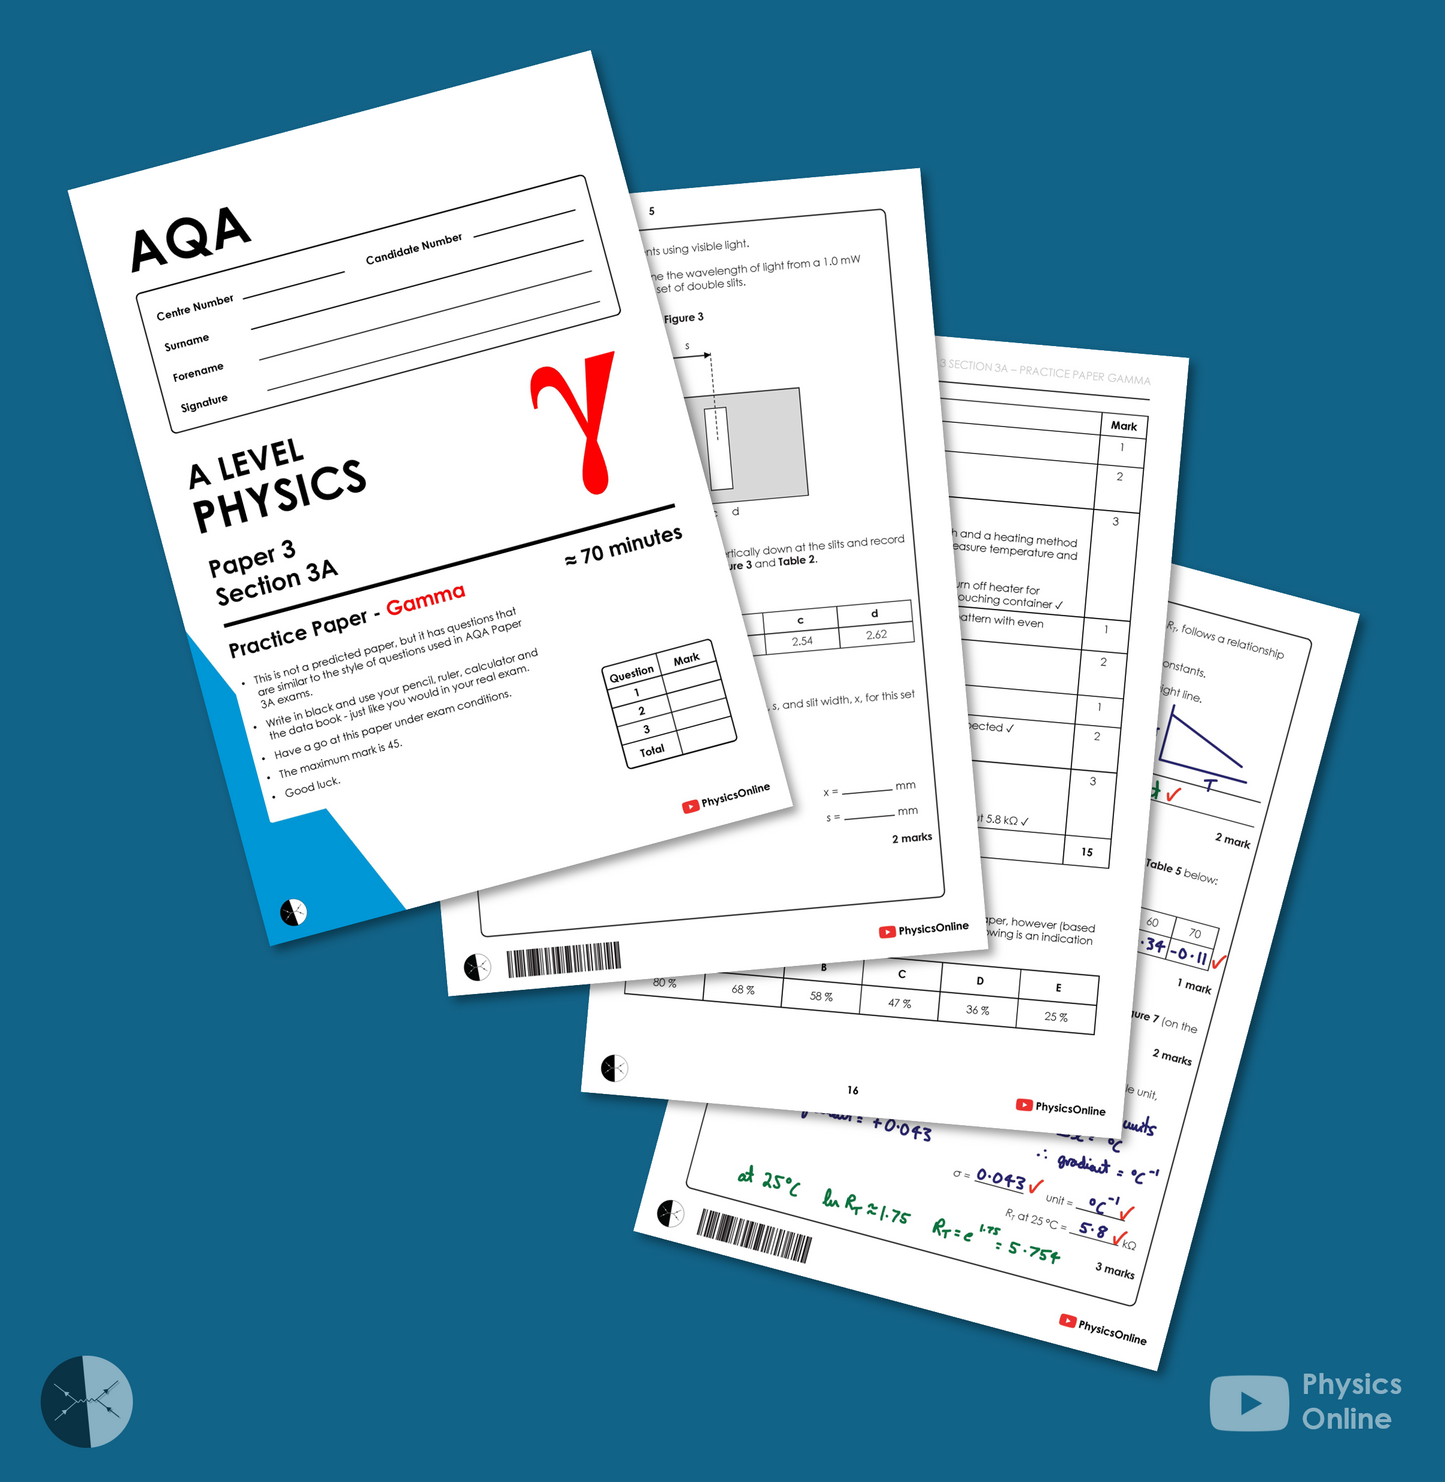 AQA Practice Paper | 3A - Gamma | Teacher Issue | A Level Physics